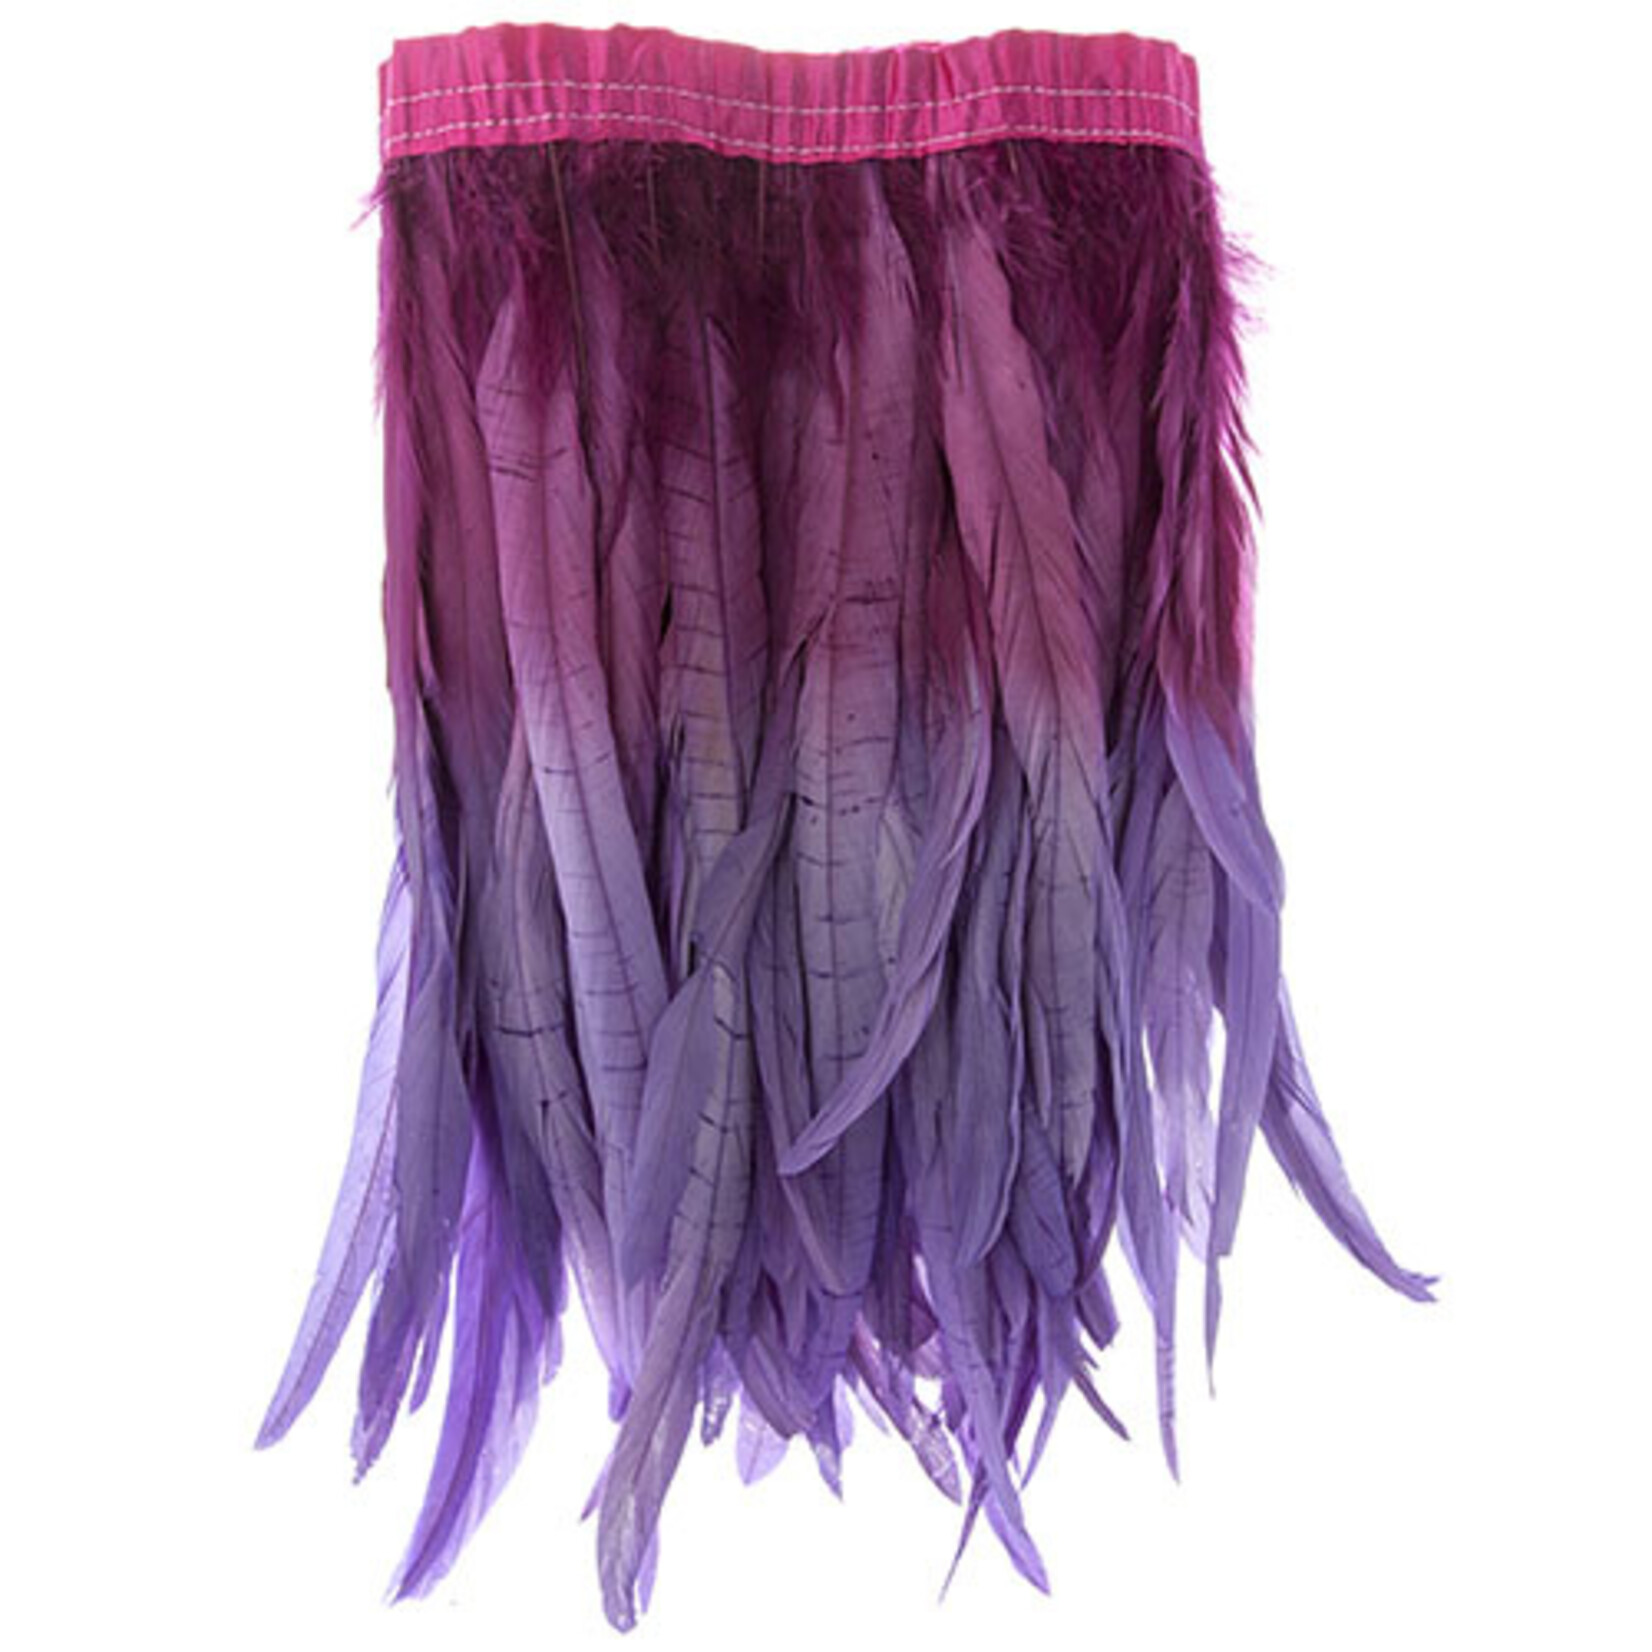 Coque Feathers Value 2 Tone 14 - 16 Inches Purple Flare